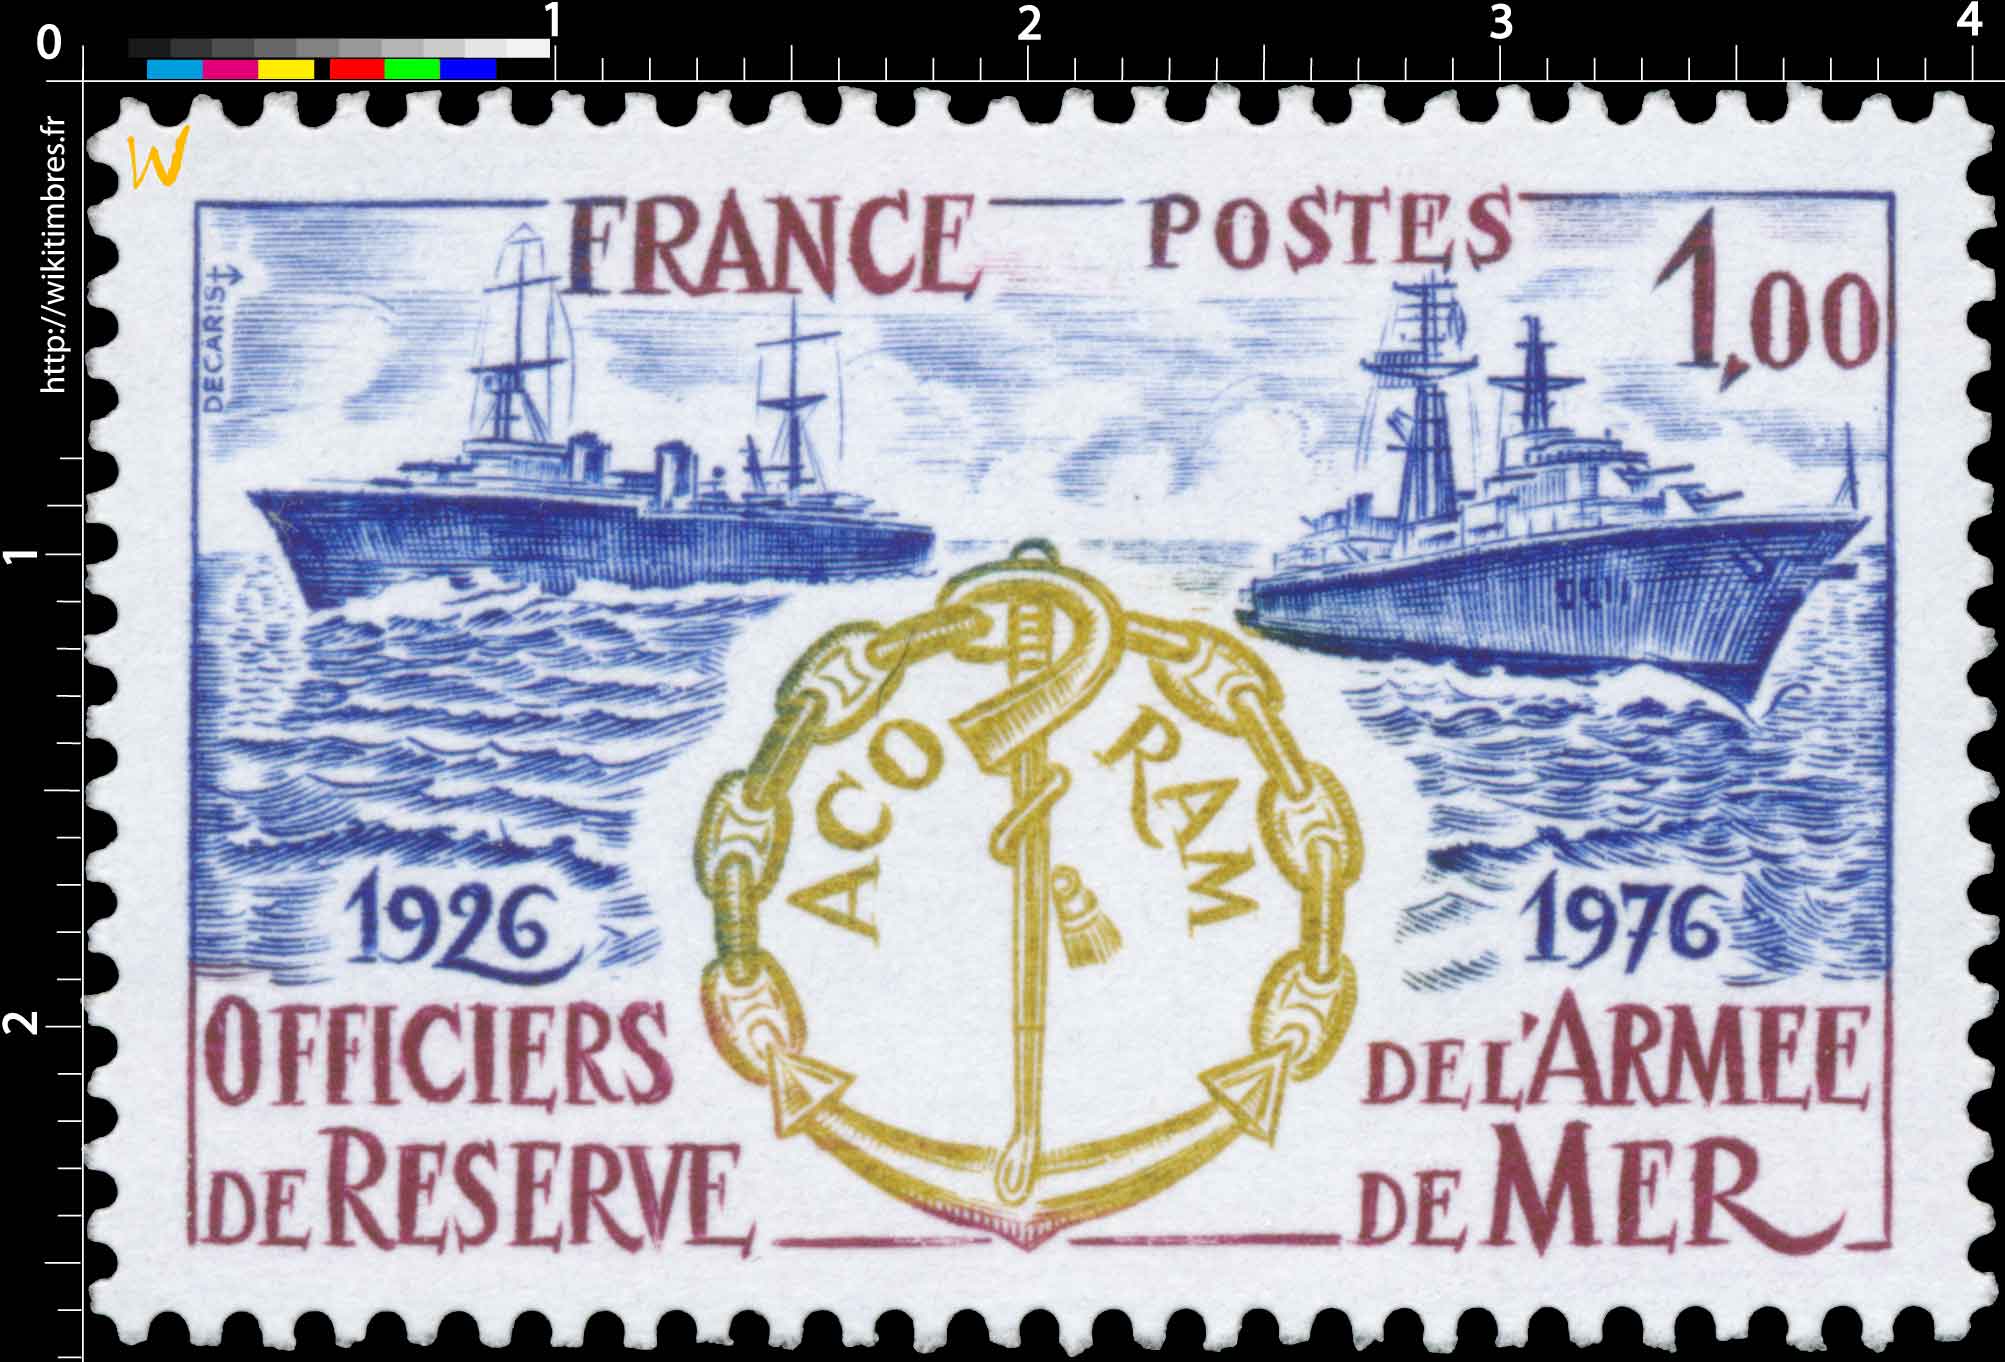 1976 ACORAM OFFICIERS DE RESERVE DE L'ARMÉE DE MER 1926-1976